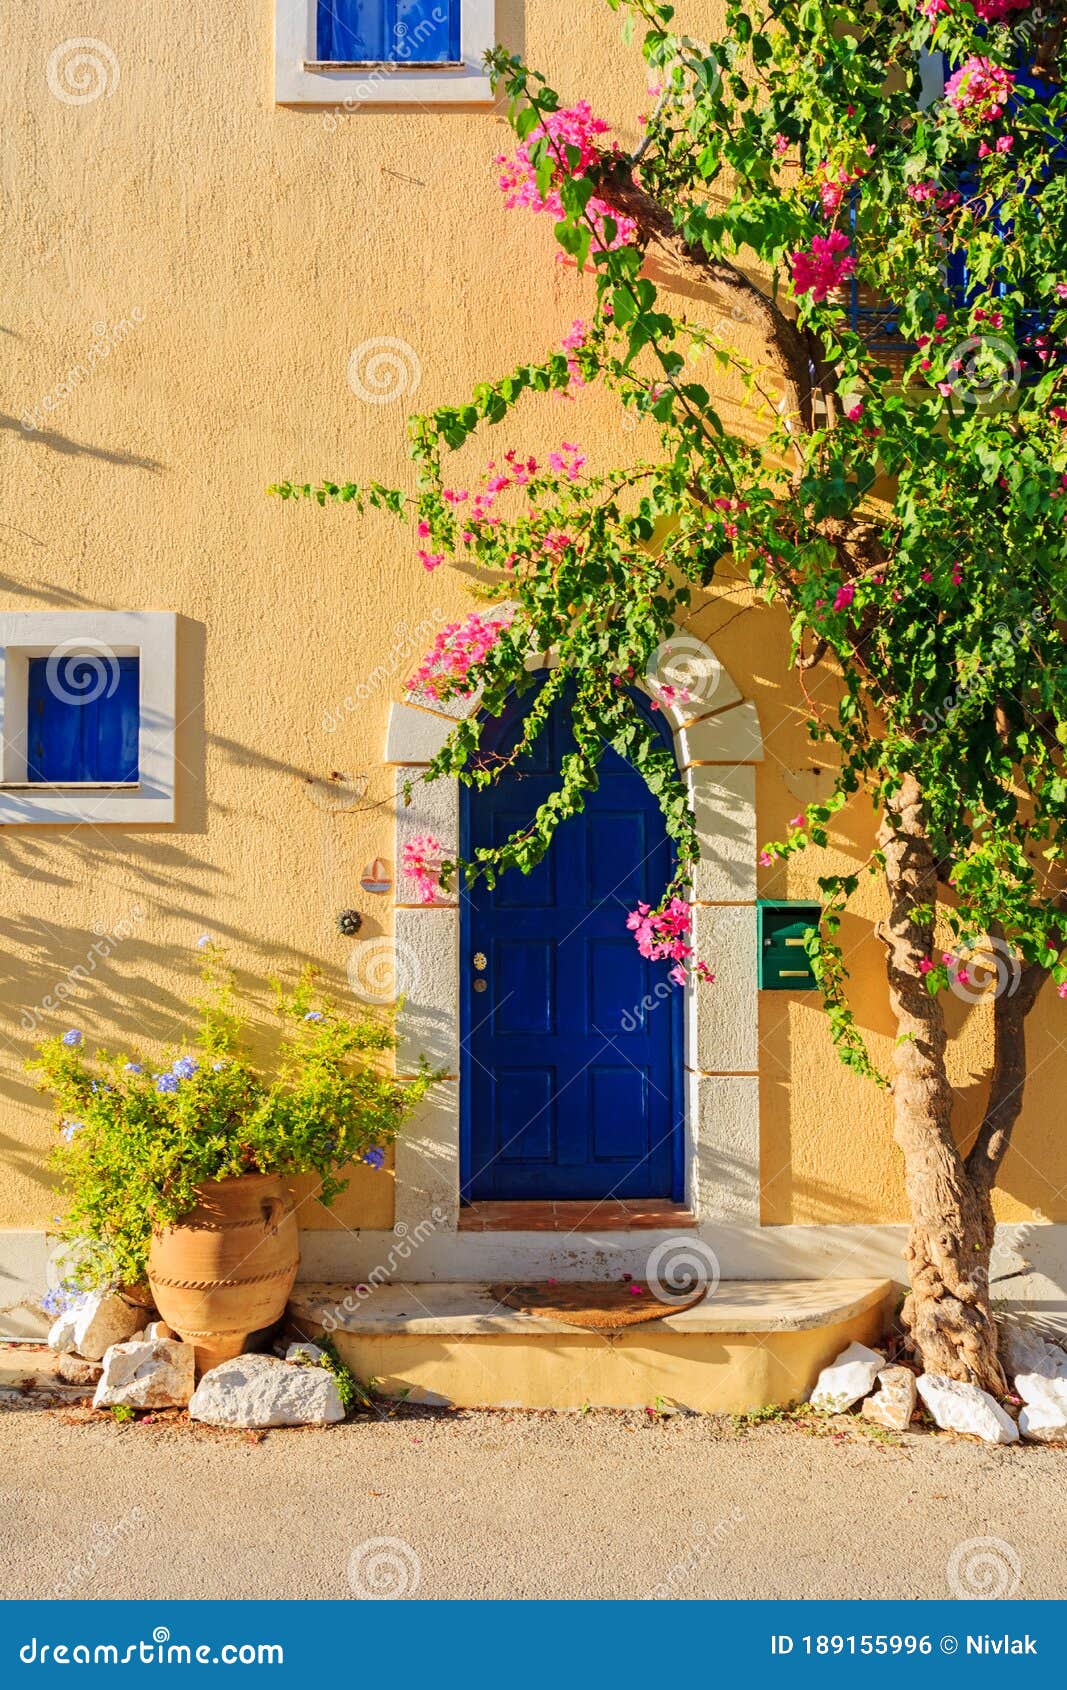 Old Pictorial Greek Door with Flowers Stock Photo - Image of greek ...